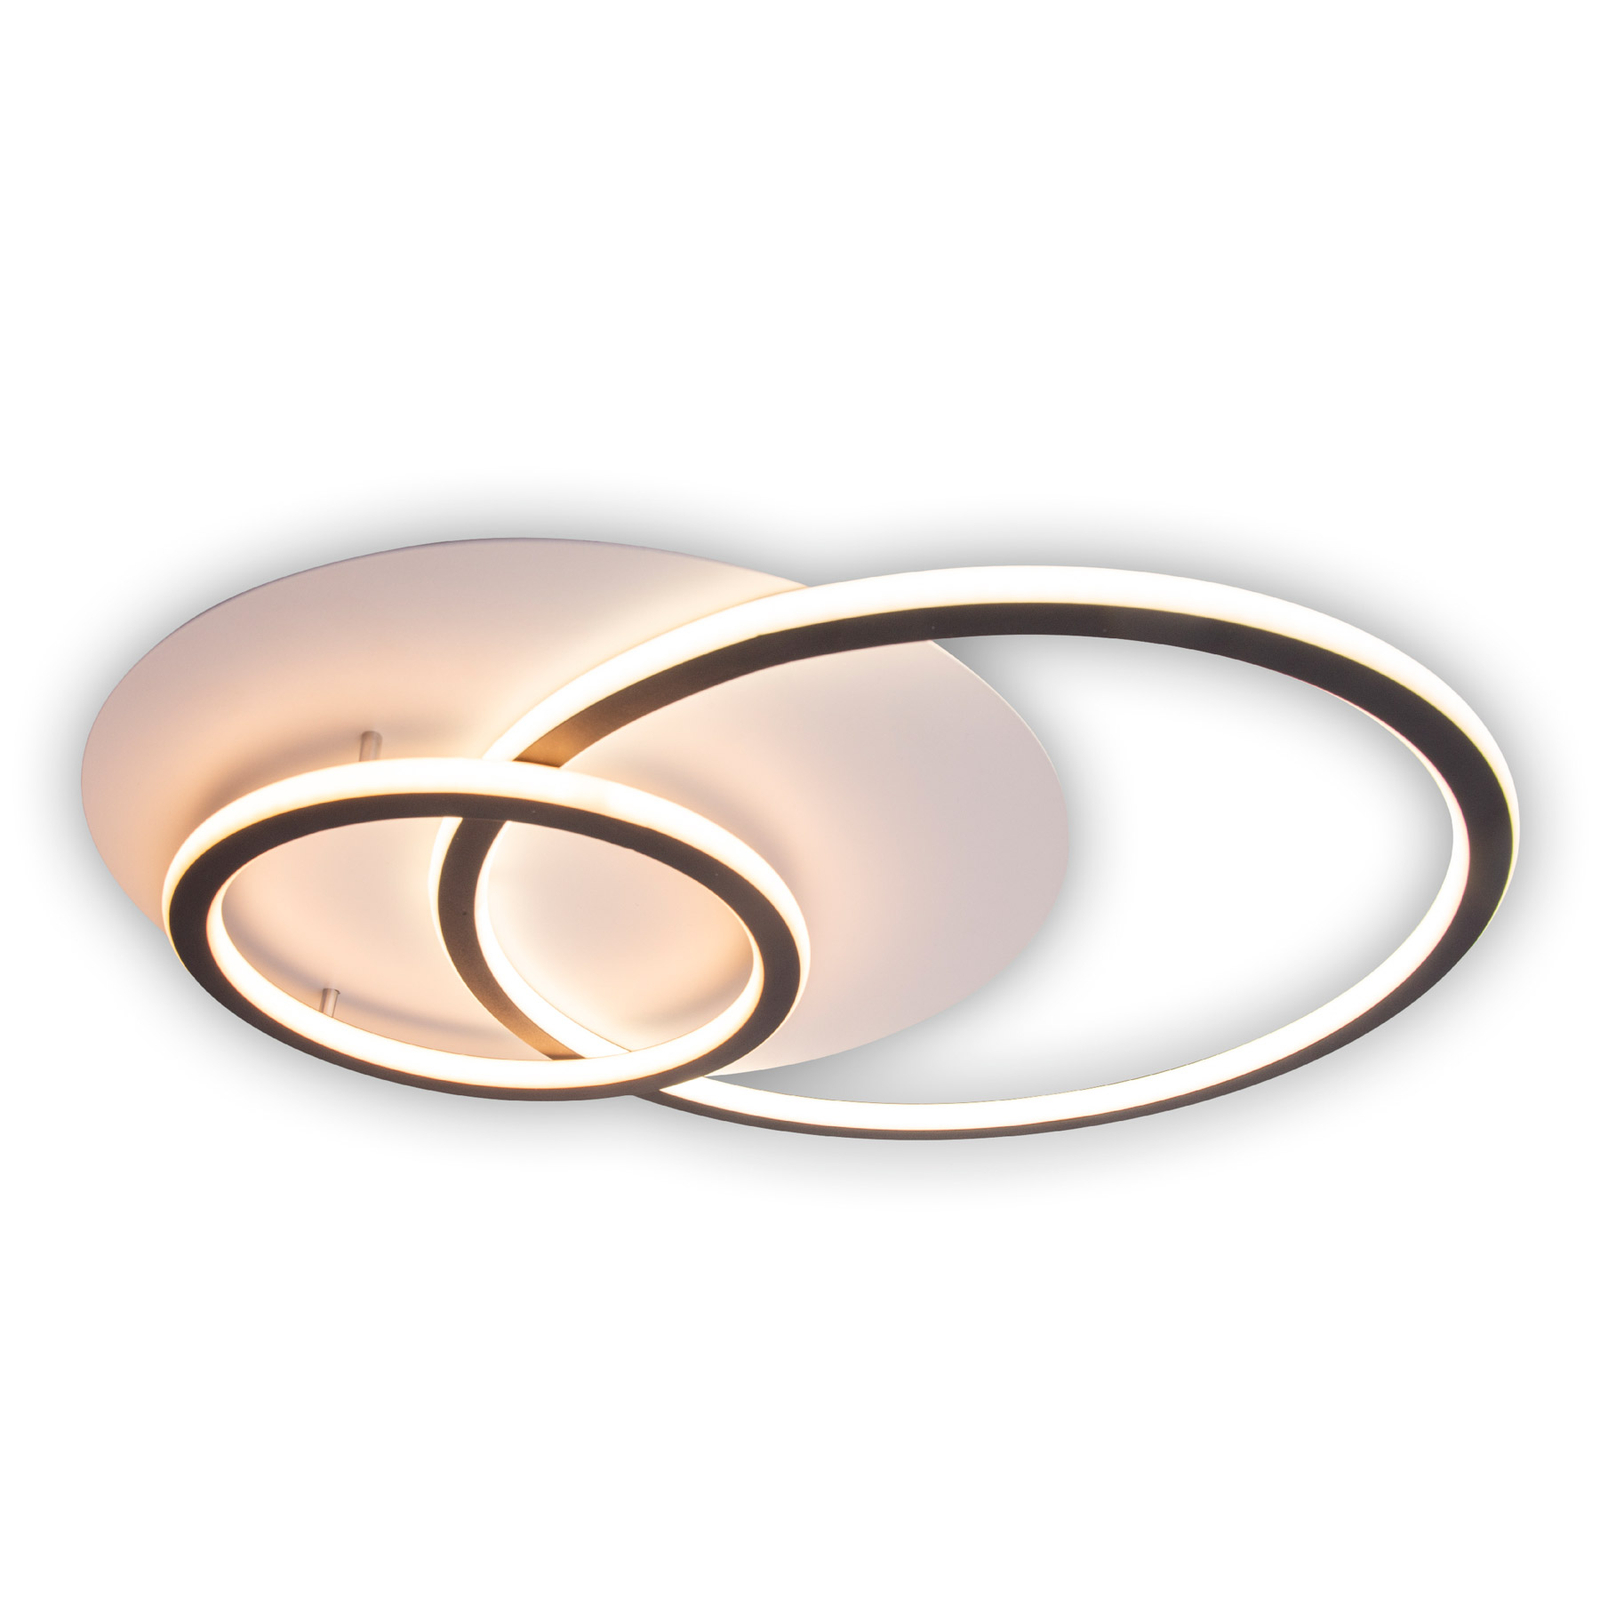 Plafón LED Kirk, forma de anillo, 2 luces, blanco